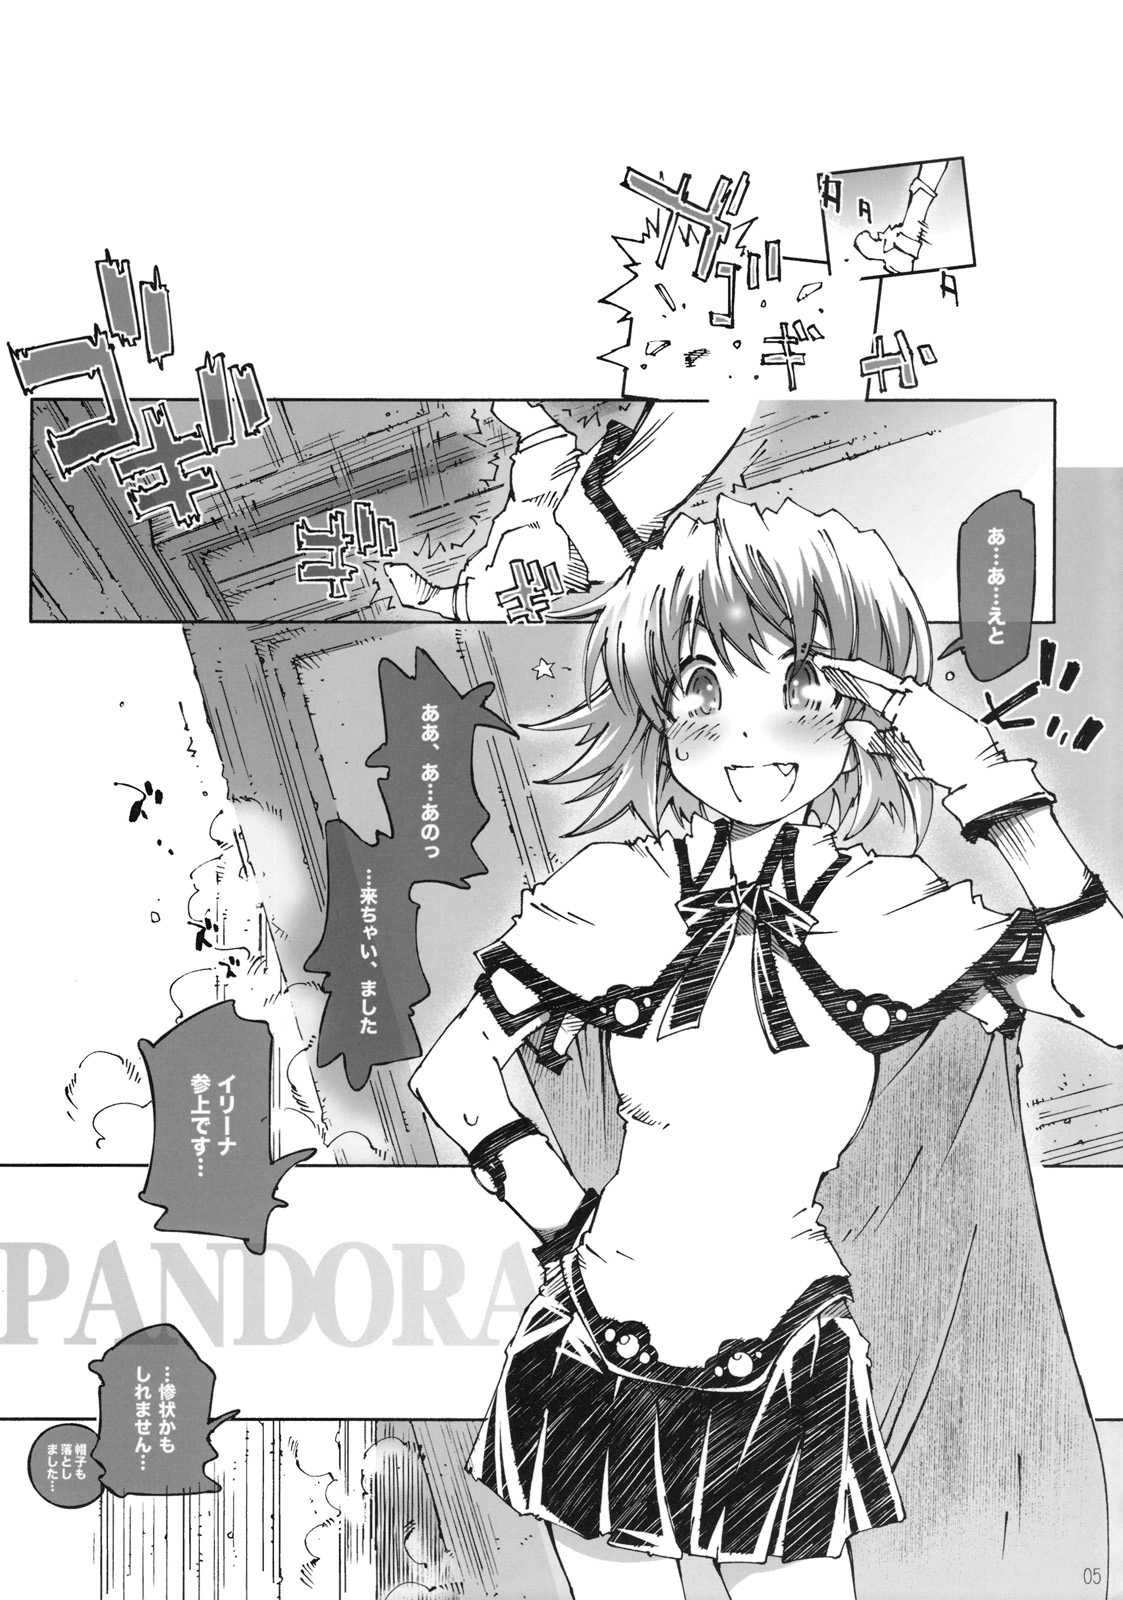 [OPEN BOOK] PANDORA -S.W 1.0.1- (New Sword World RPG Replay) 